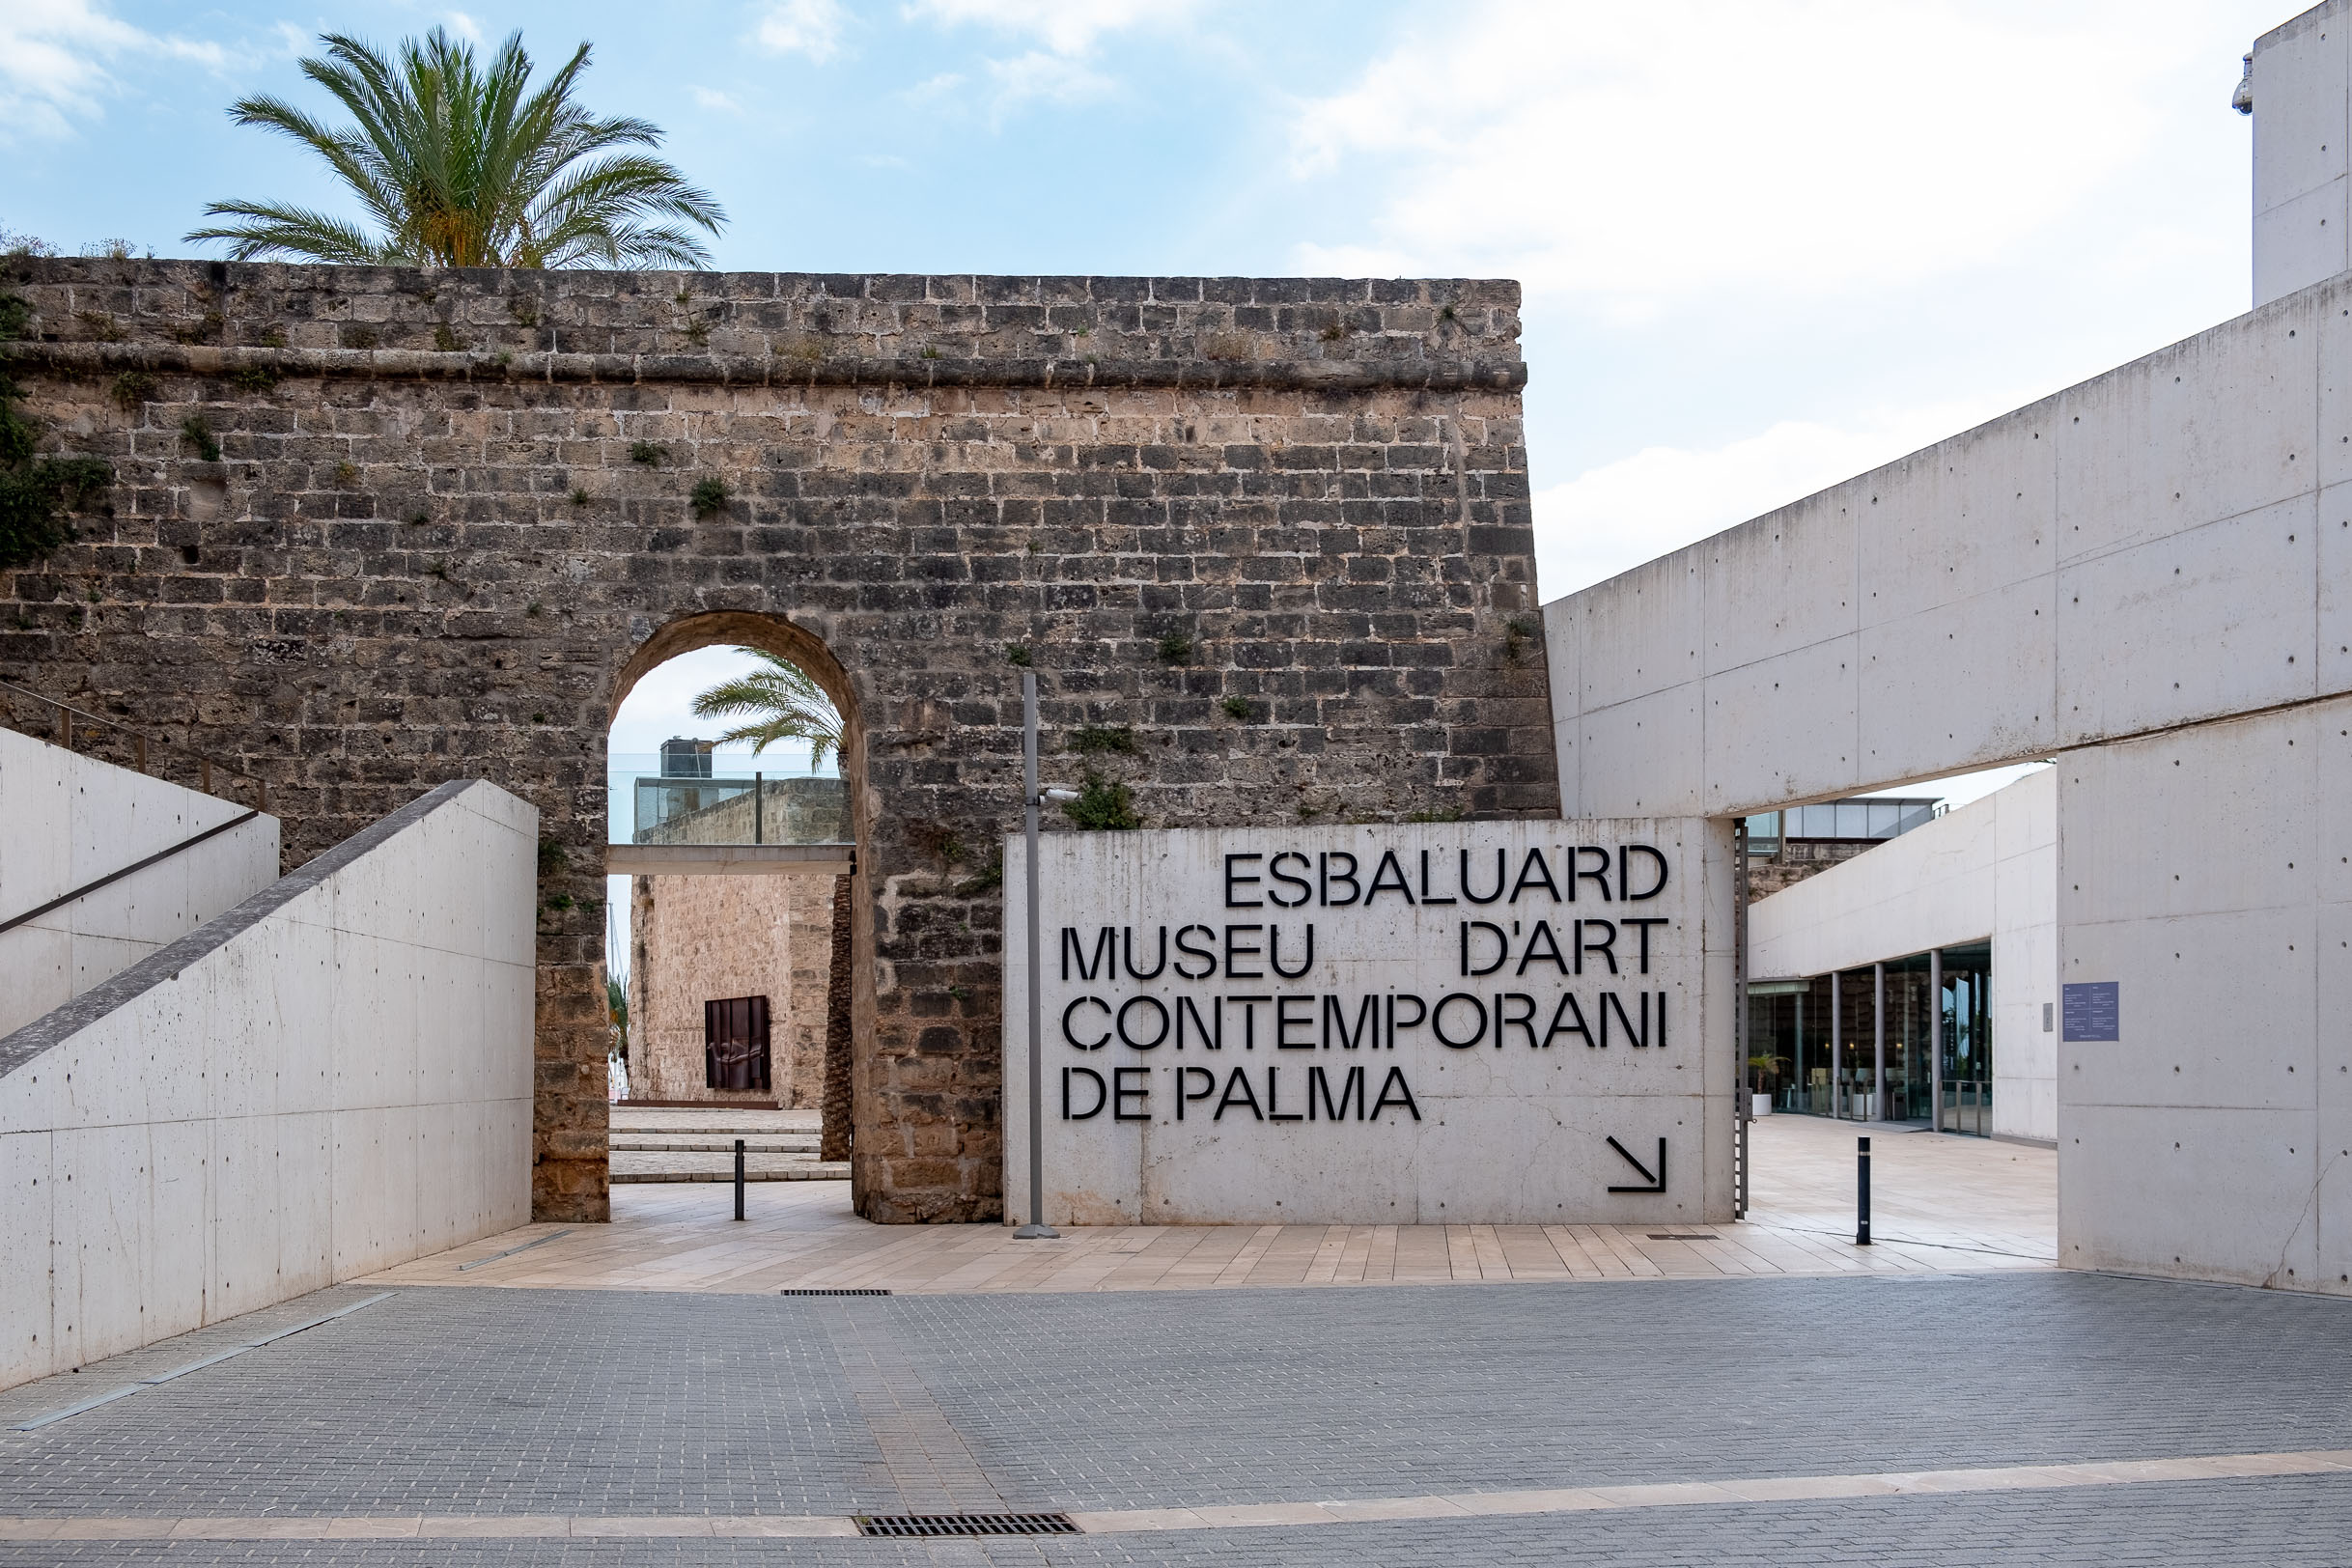 Es Baluard Museu d'Art Contemporani de Palma